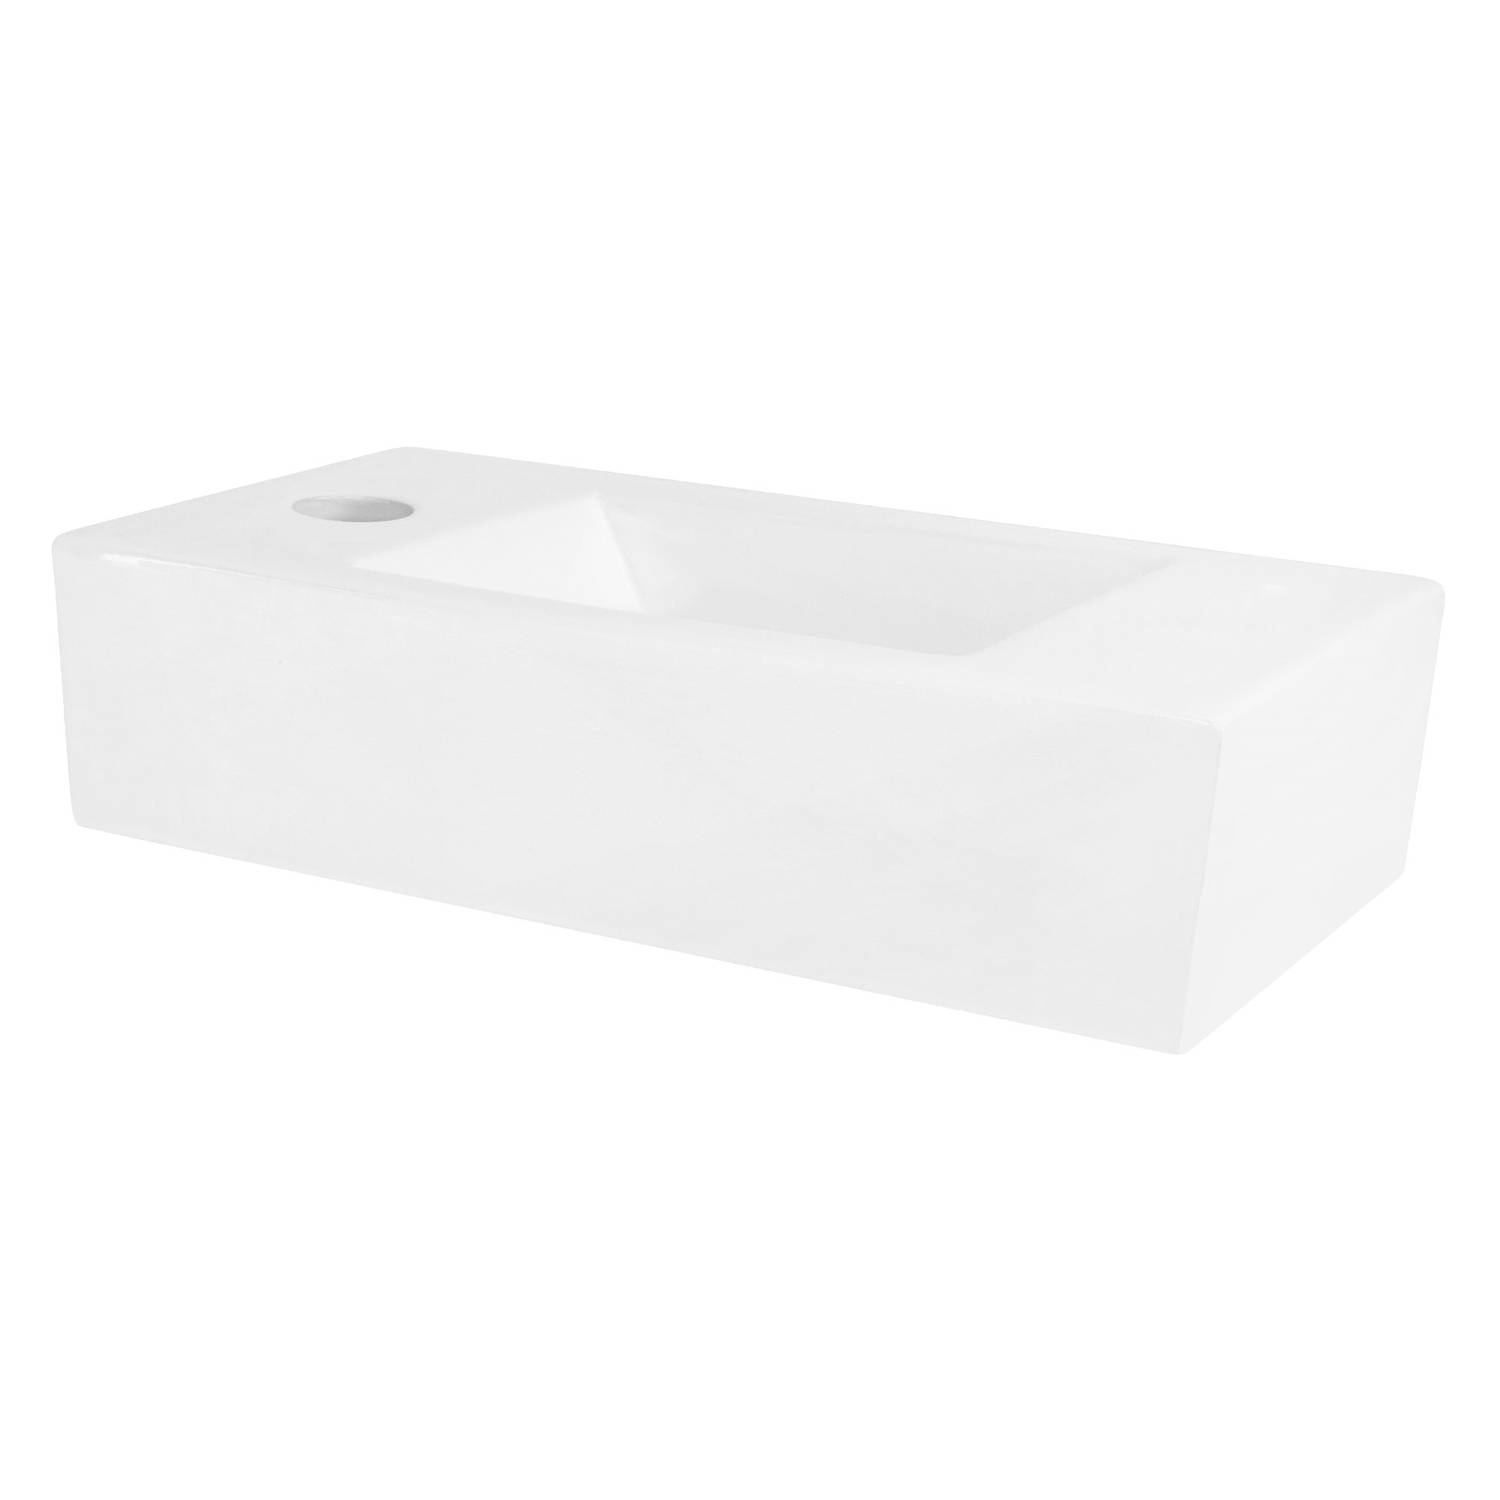 ML-Design keramische wastafel in wit 40x18,5x10 cm, hoekig, klein, kraangat links, wand- of opzetwastafel, moderne wastafel waskom handwasbak, voor badkamers